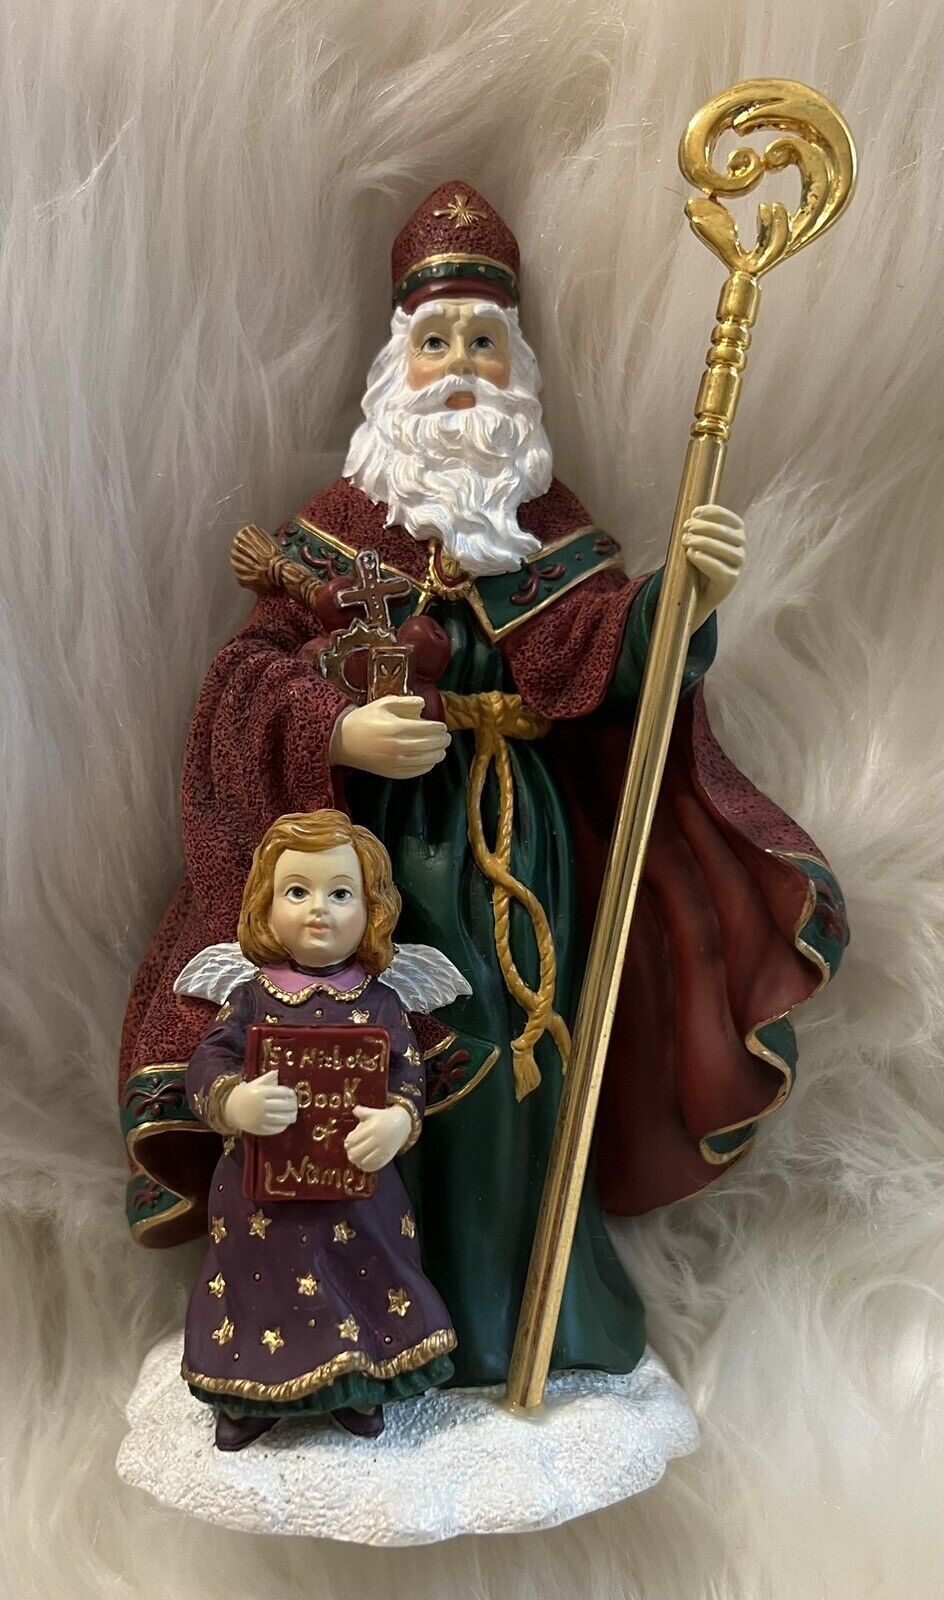 Pipka Reflections of Christmas St Nicholas 11314 Figure 3845 Figurine In Box